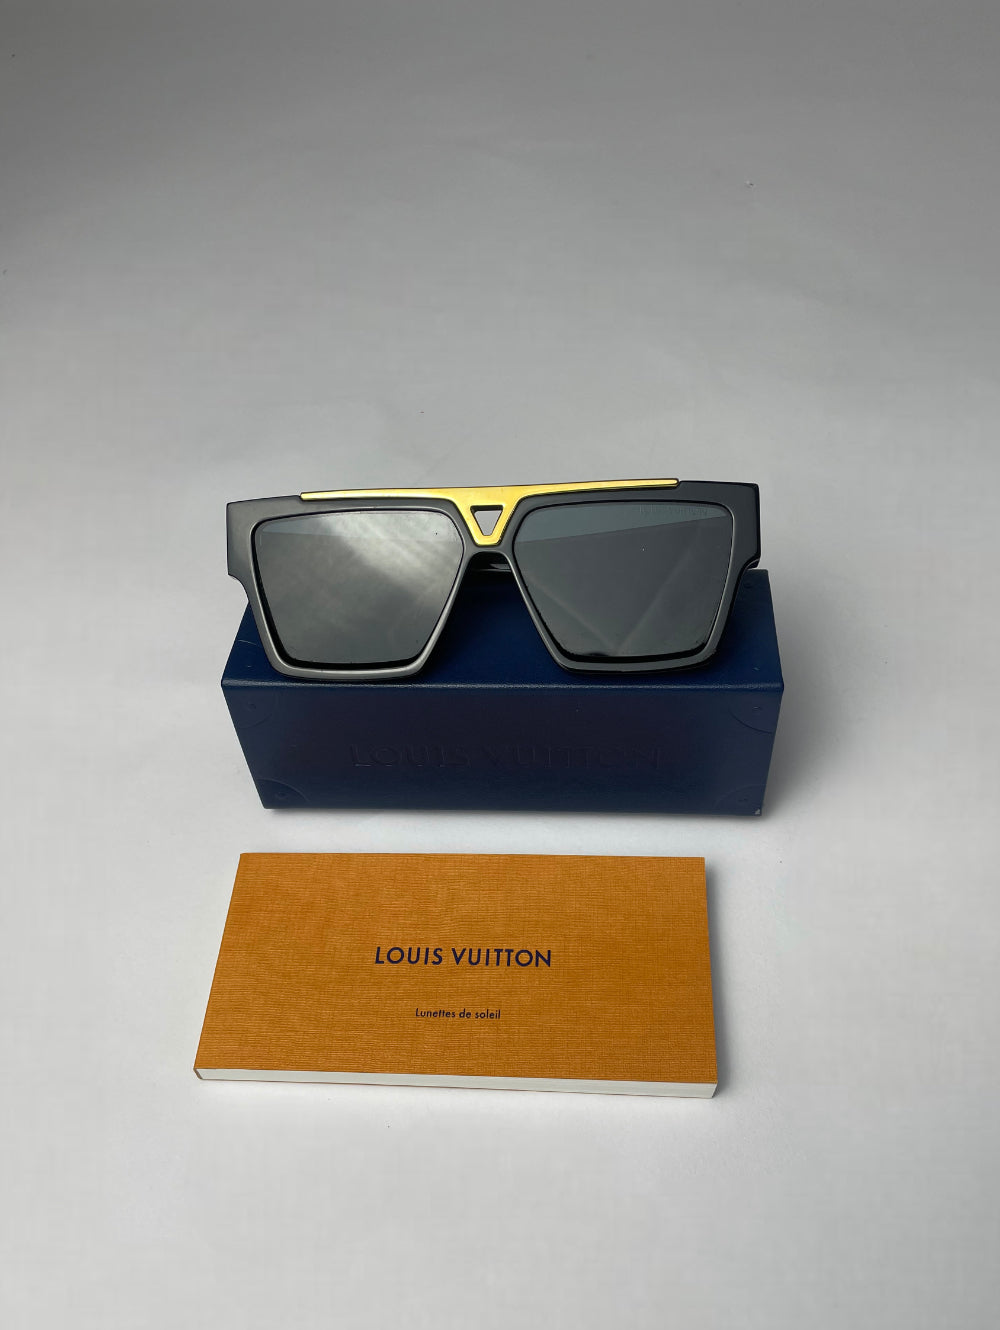 Louis Vuitton Men's Sunglasses for sale in London, United Kingdom